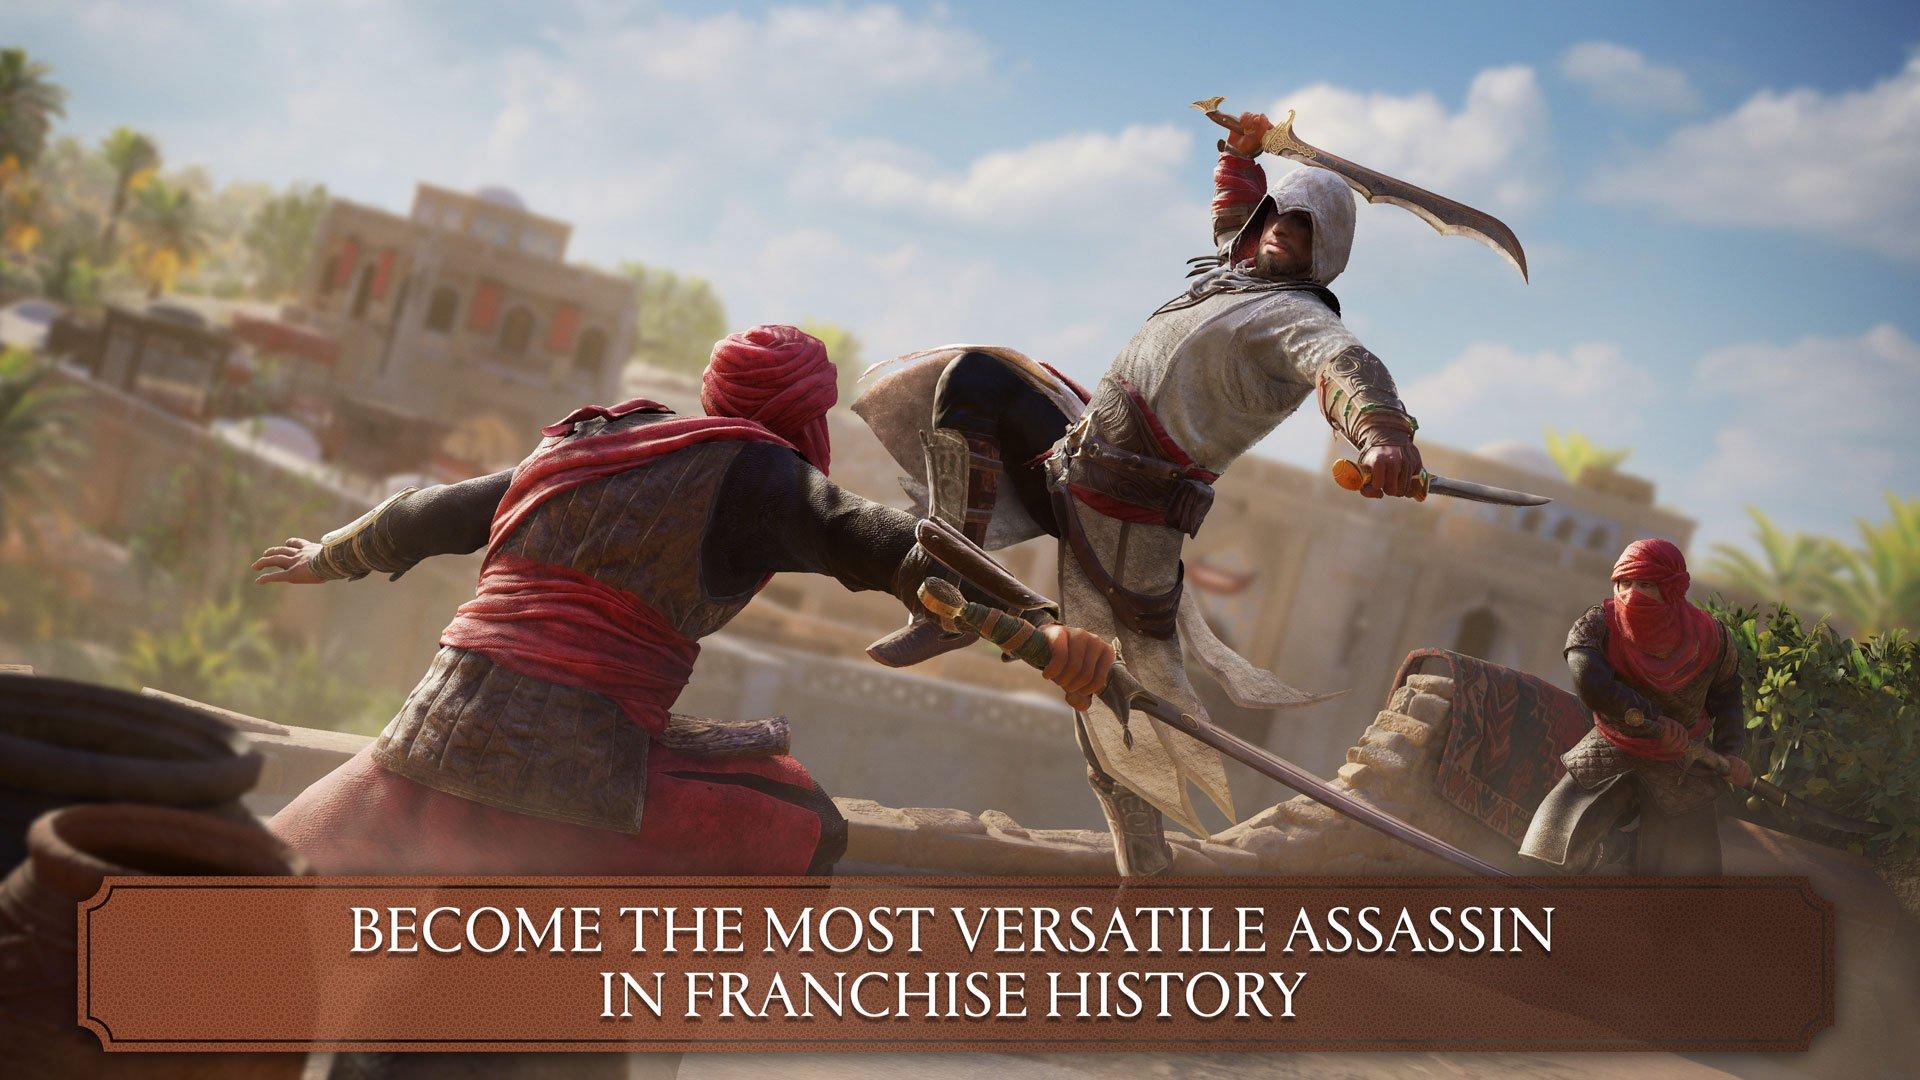 Assassin's Creed® Odyssey - EDIÇÃO DELUXE - Xbox One e Xbox Series